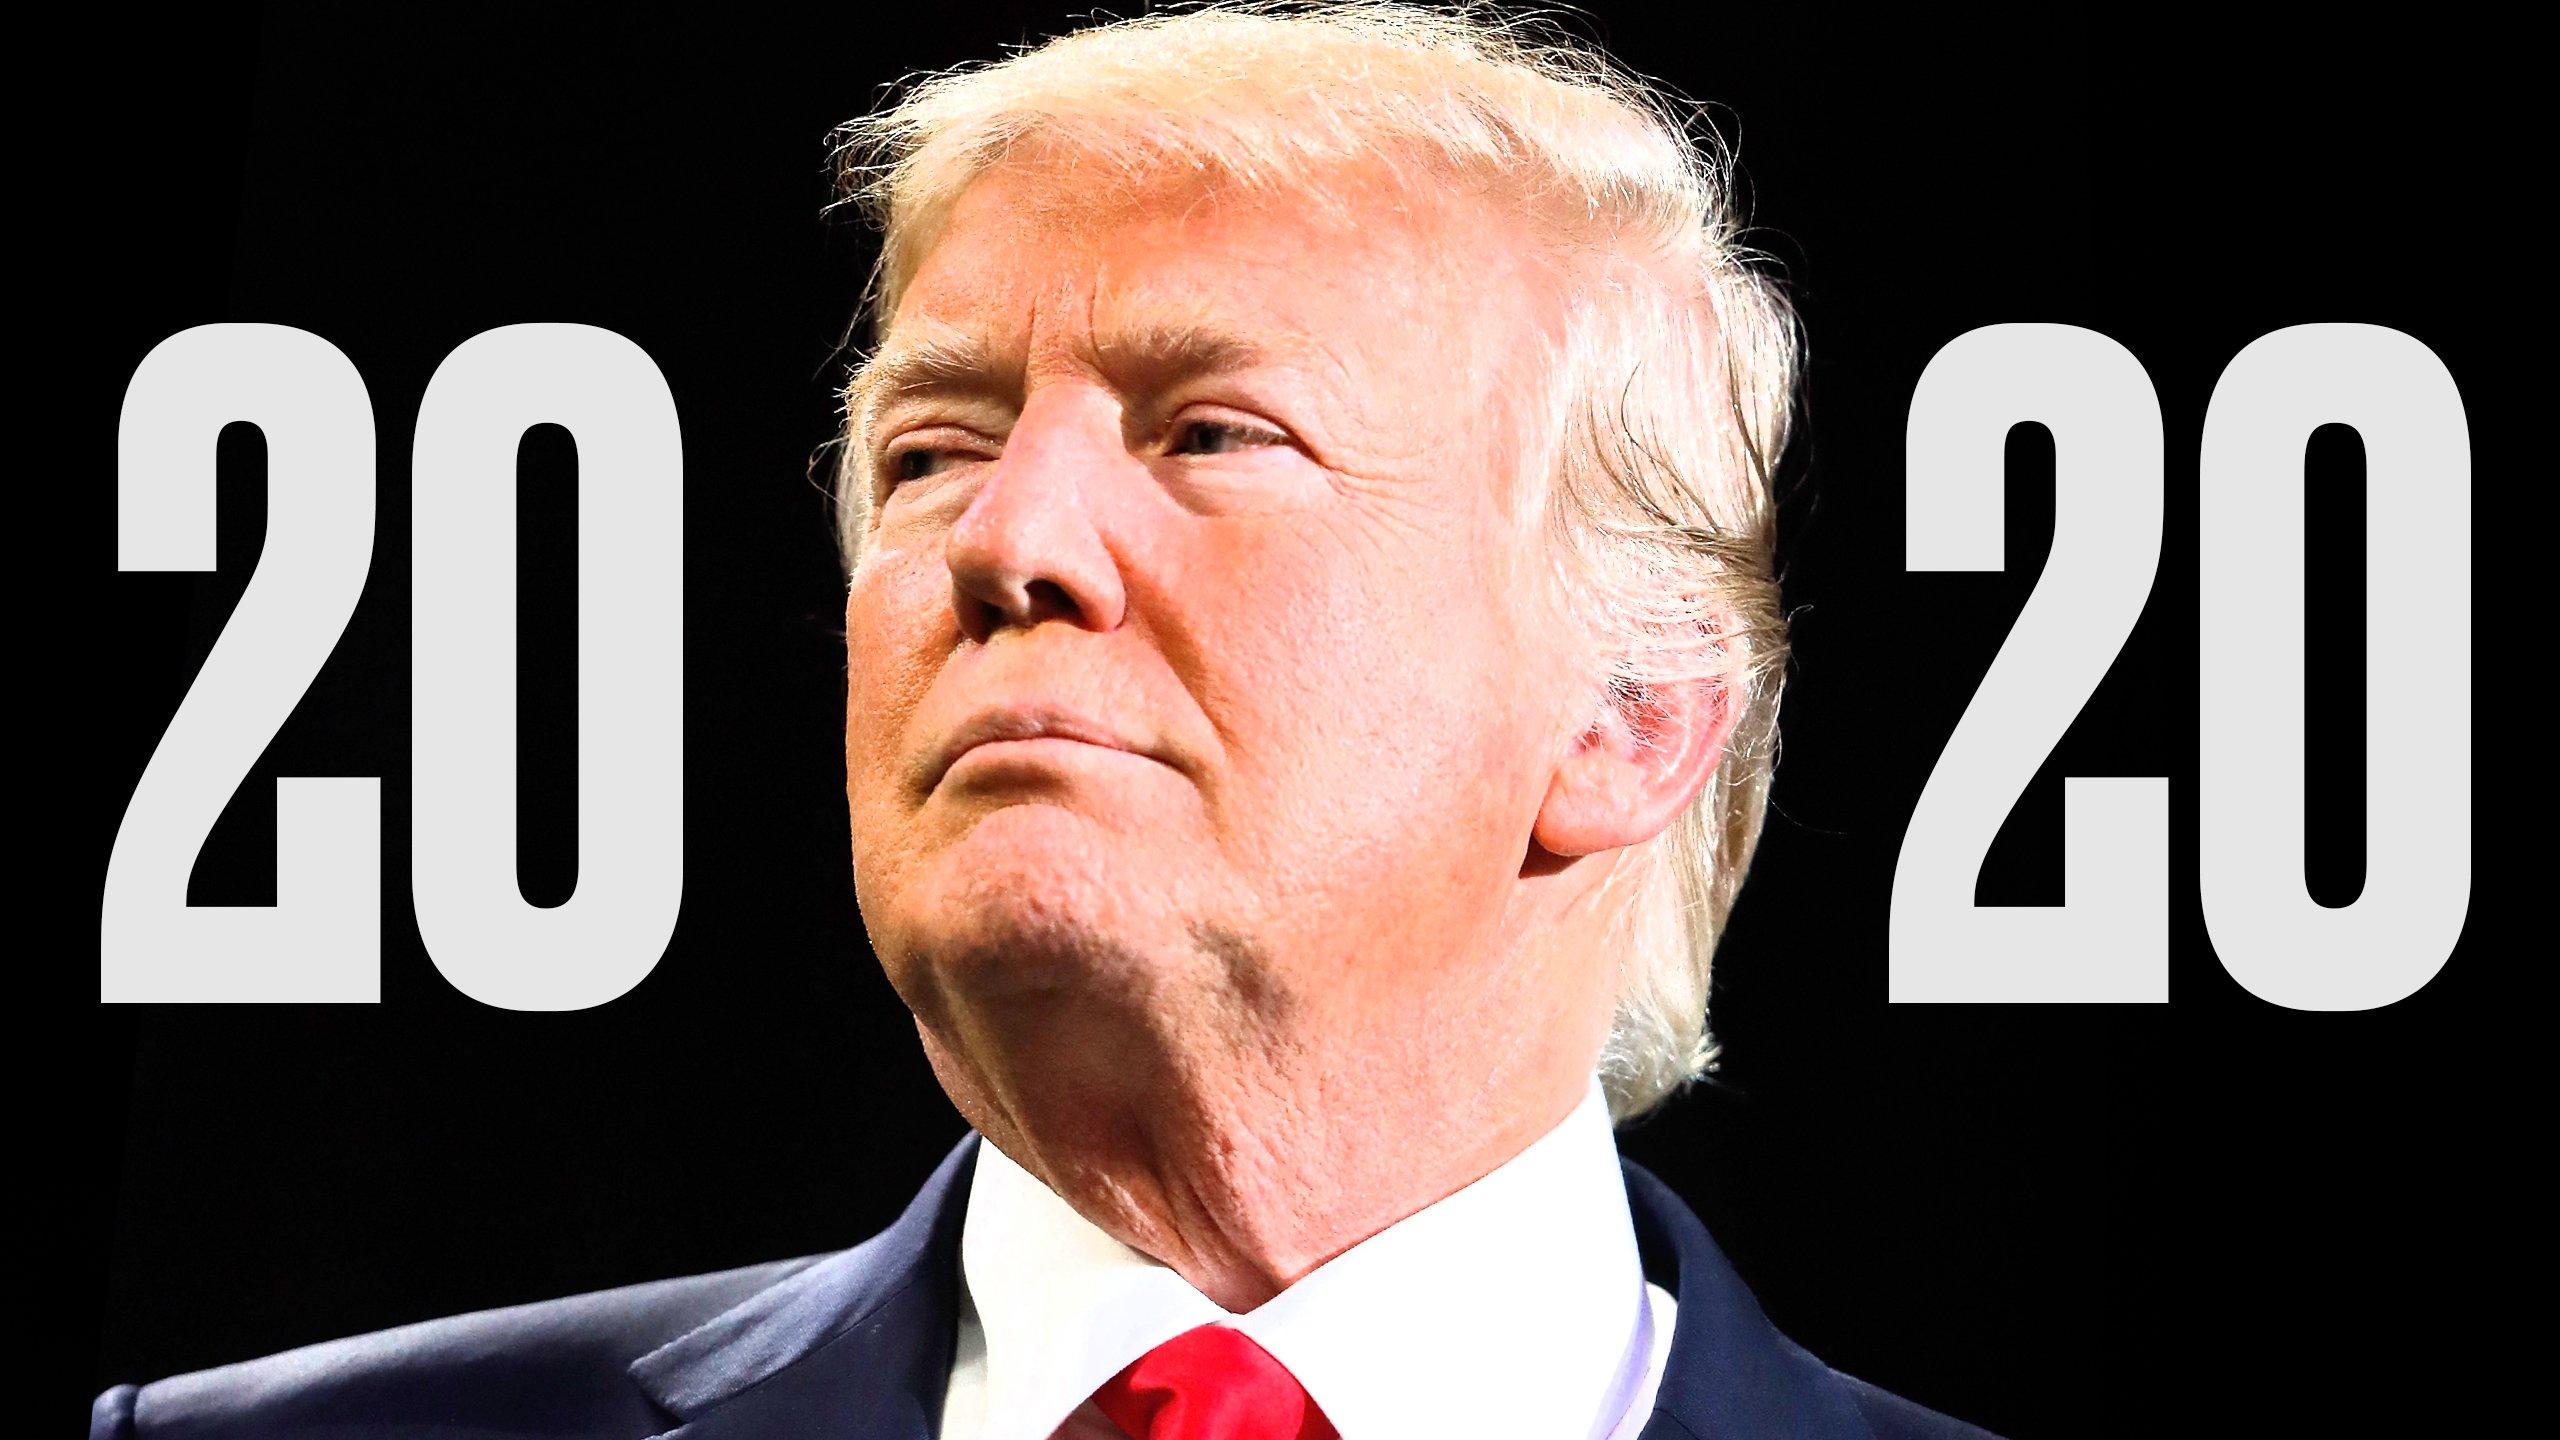 Trump: The Media Will Endorse Me in 2020—or Go Bankrupt